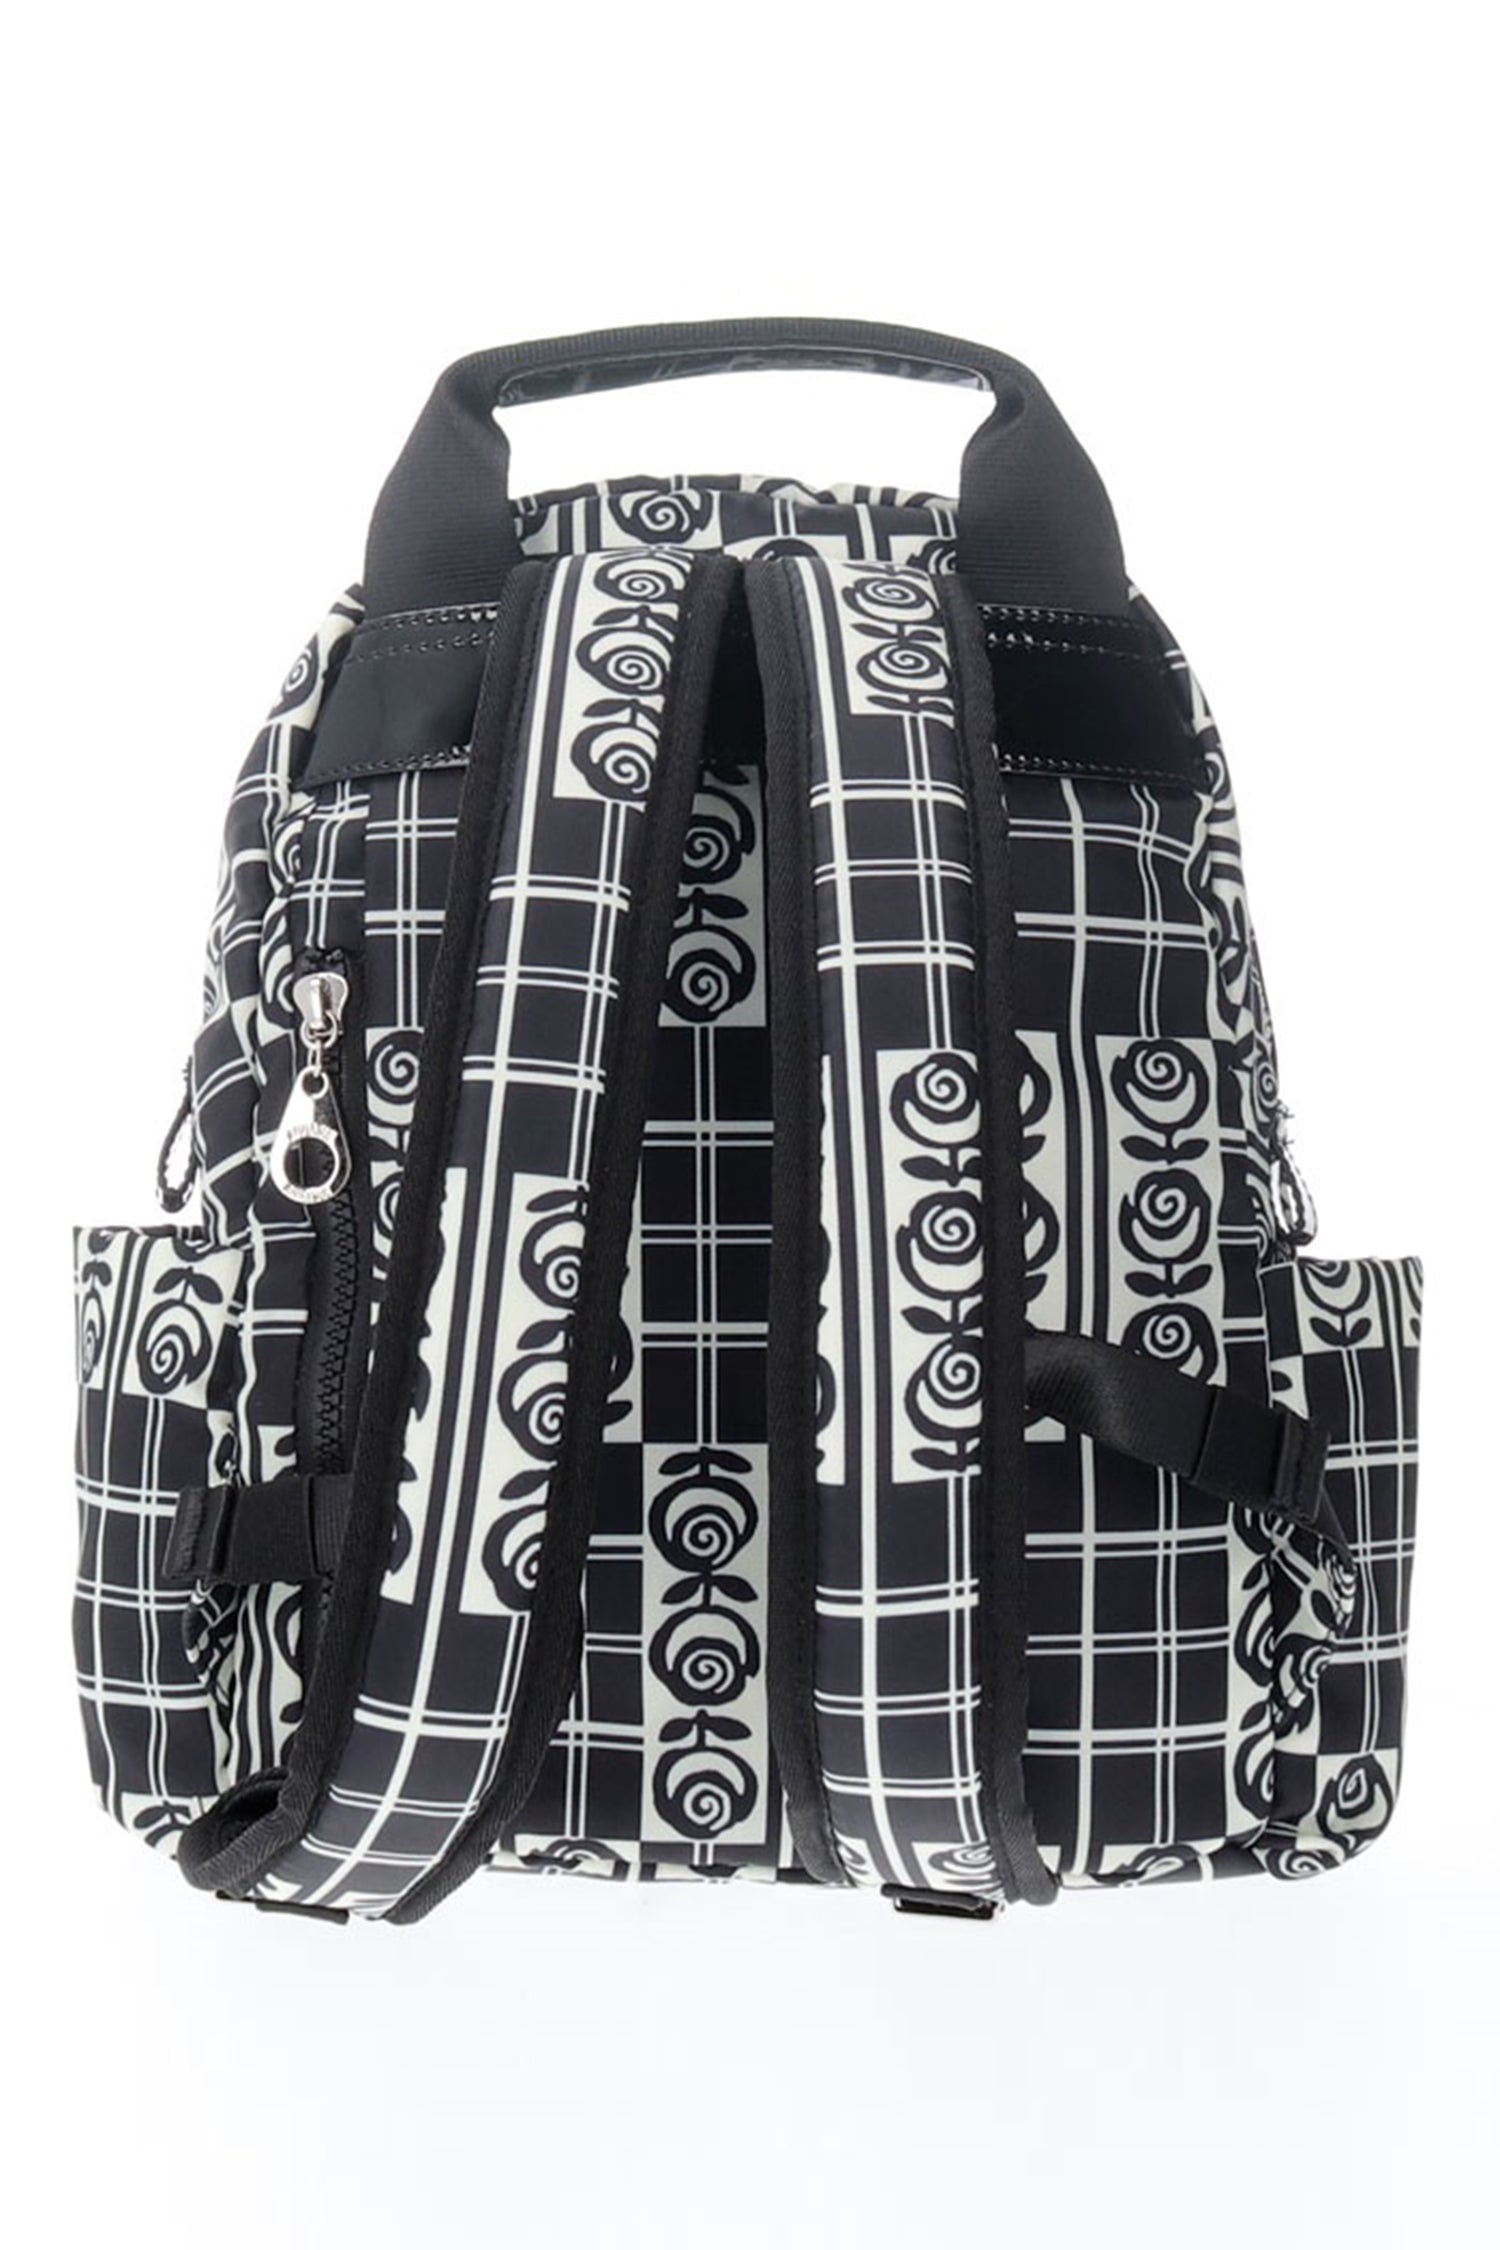 Rose Trellis Backpack, handle on top, 2-straps, design of BW roses trellis, zipper pocket on the back